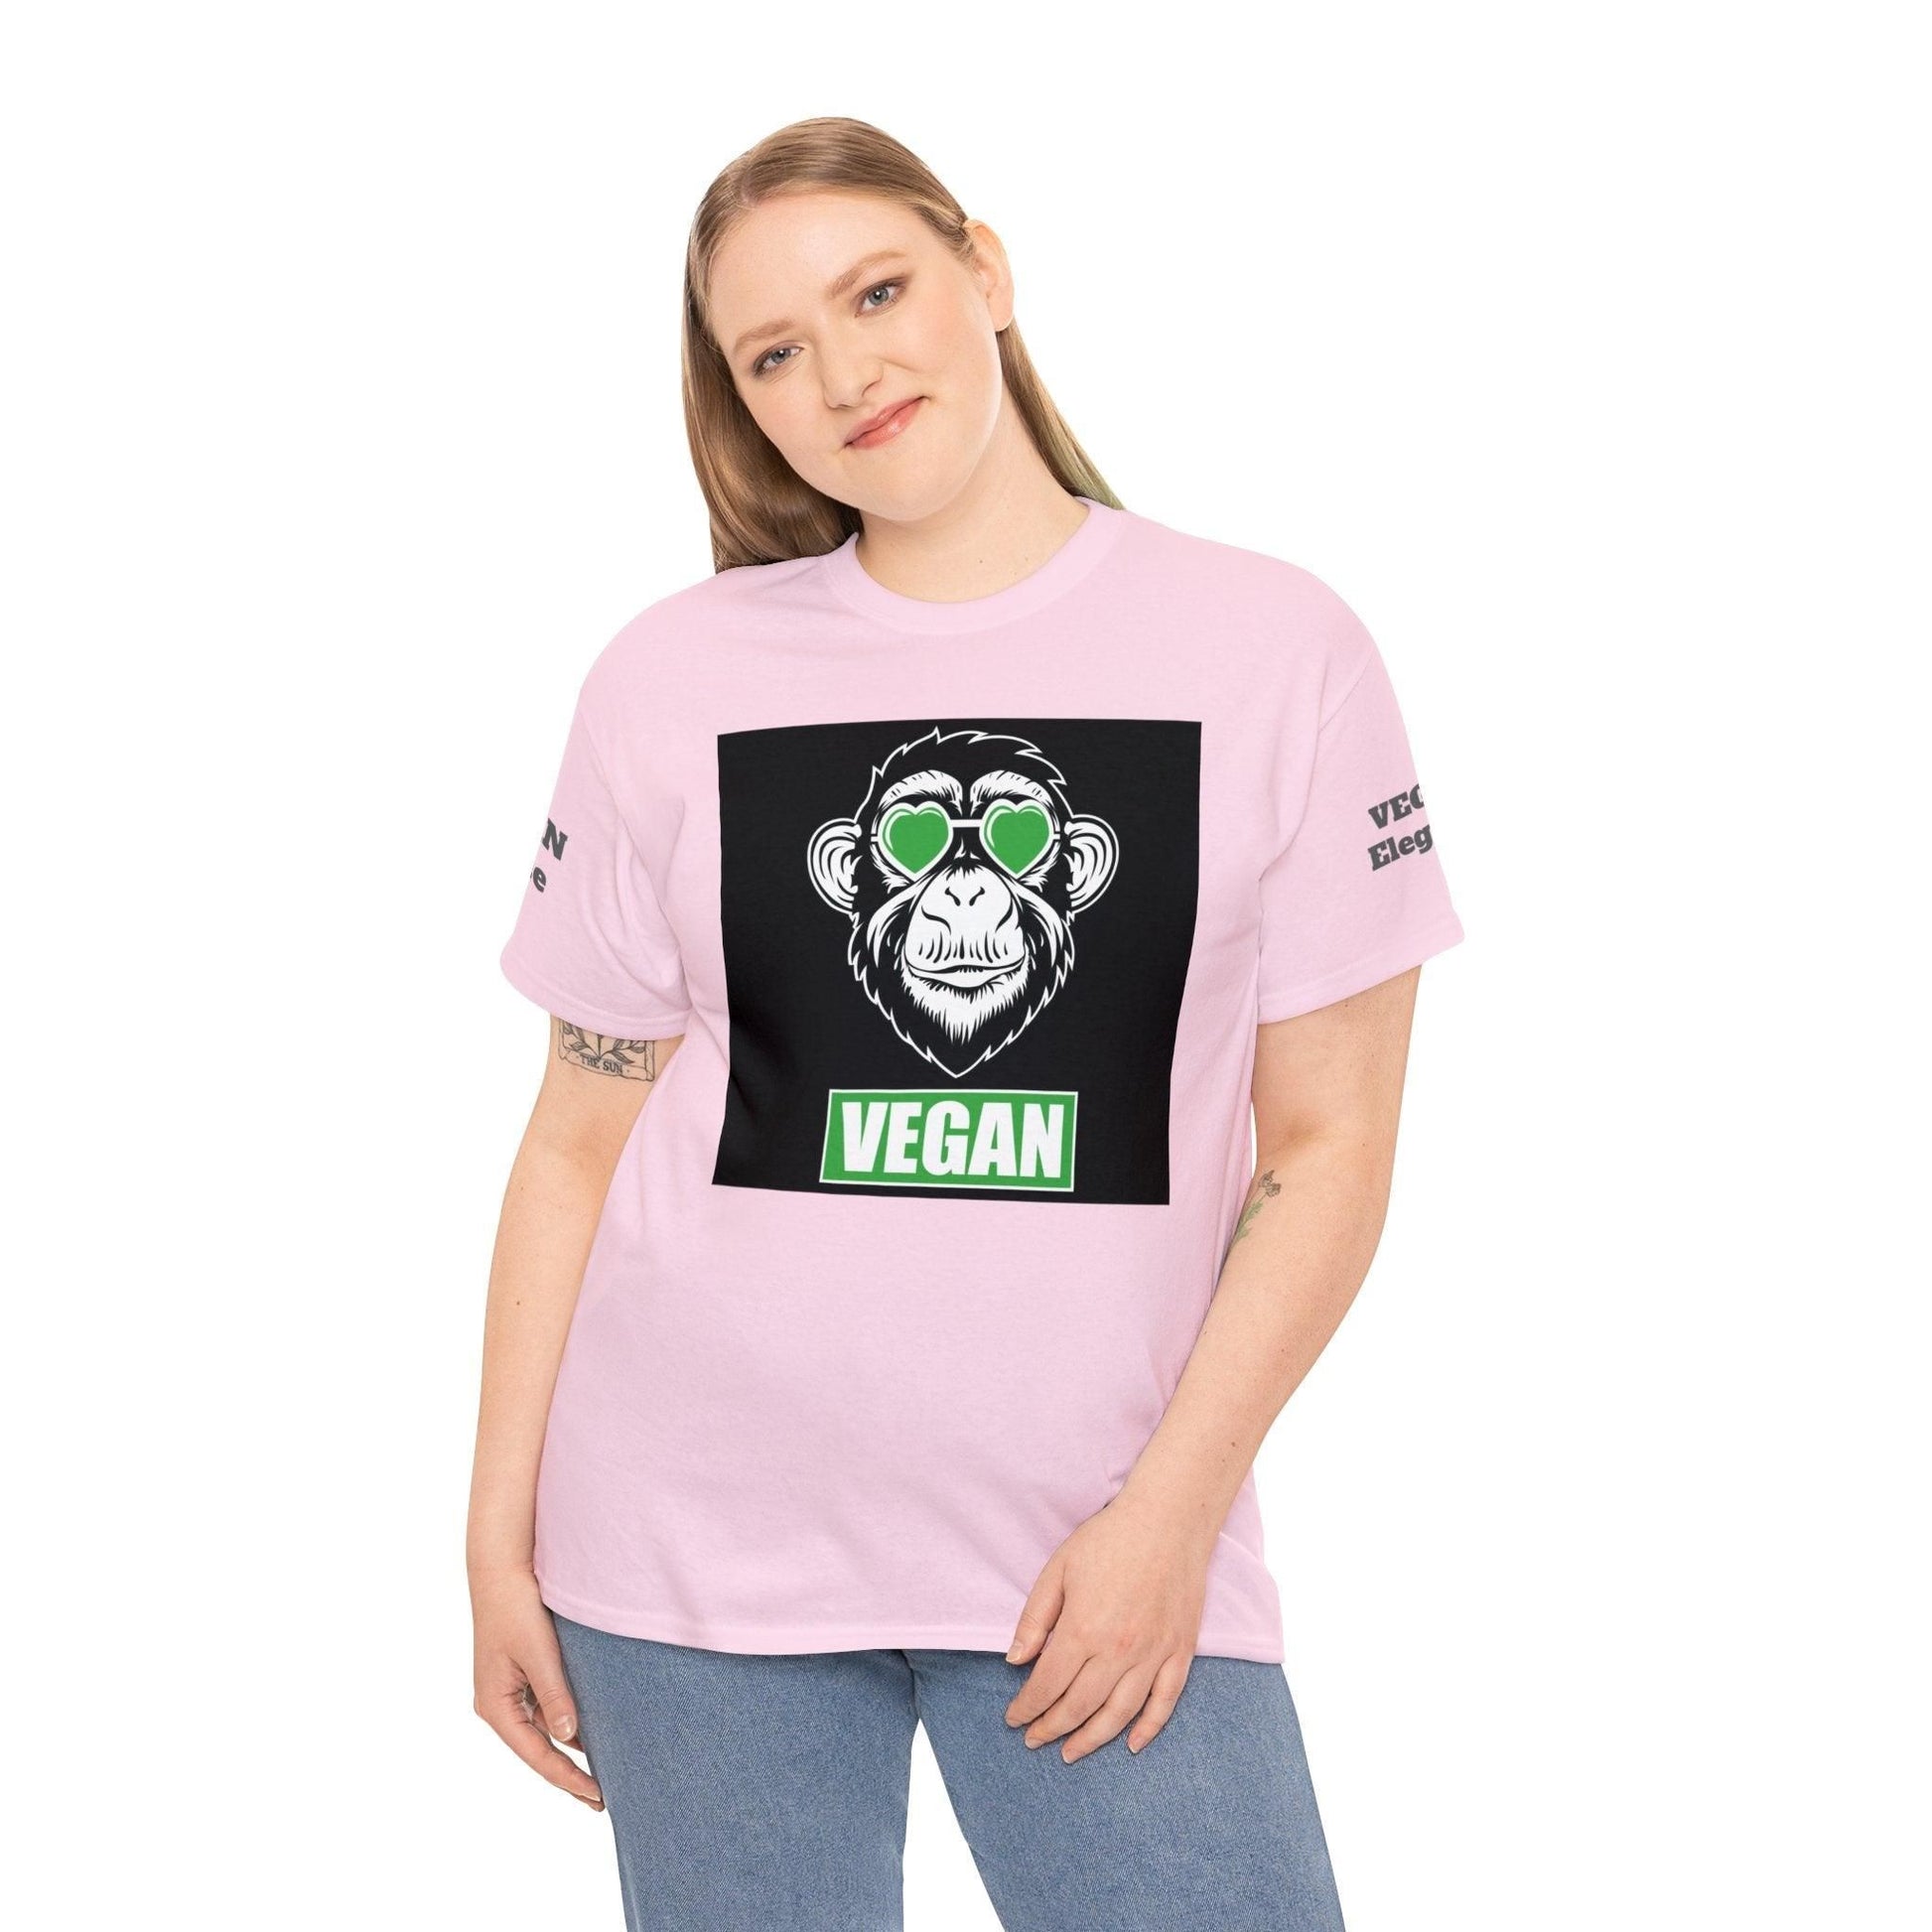 Vegan Premium Unisex Tee T-Shirt Light Pink S 